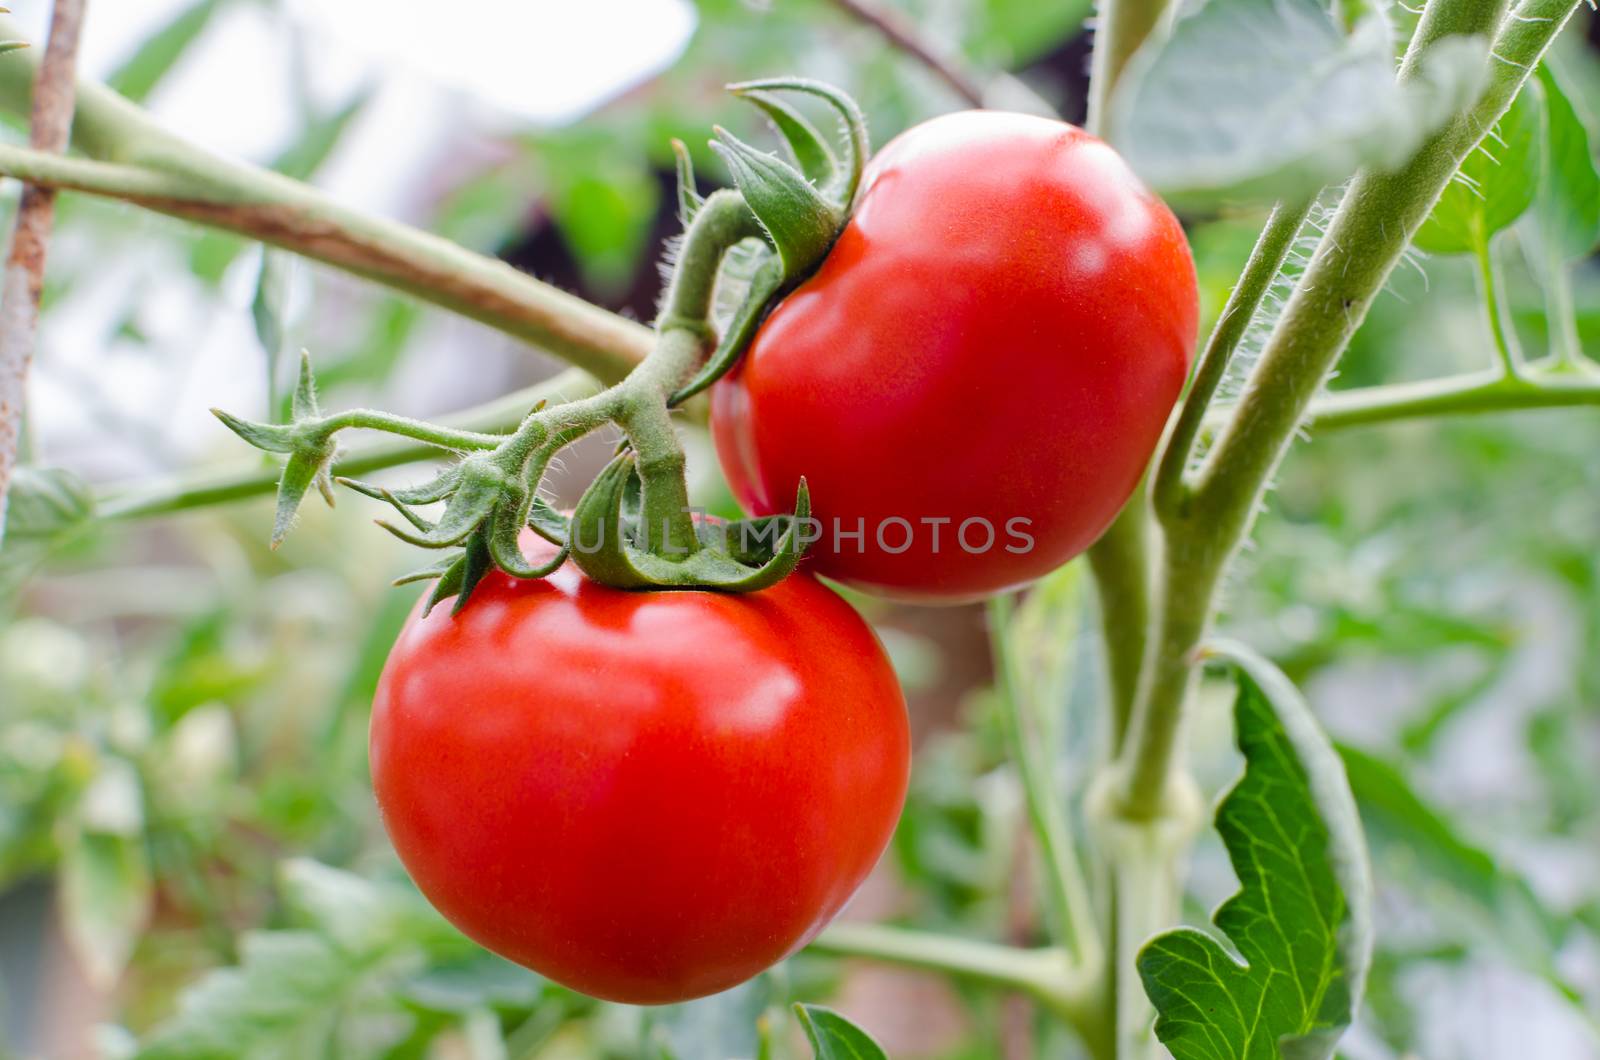 Tomatoes grown in the organic garden.